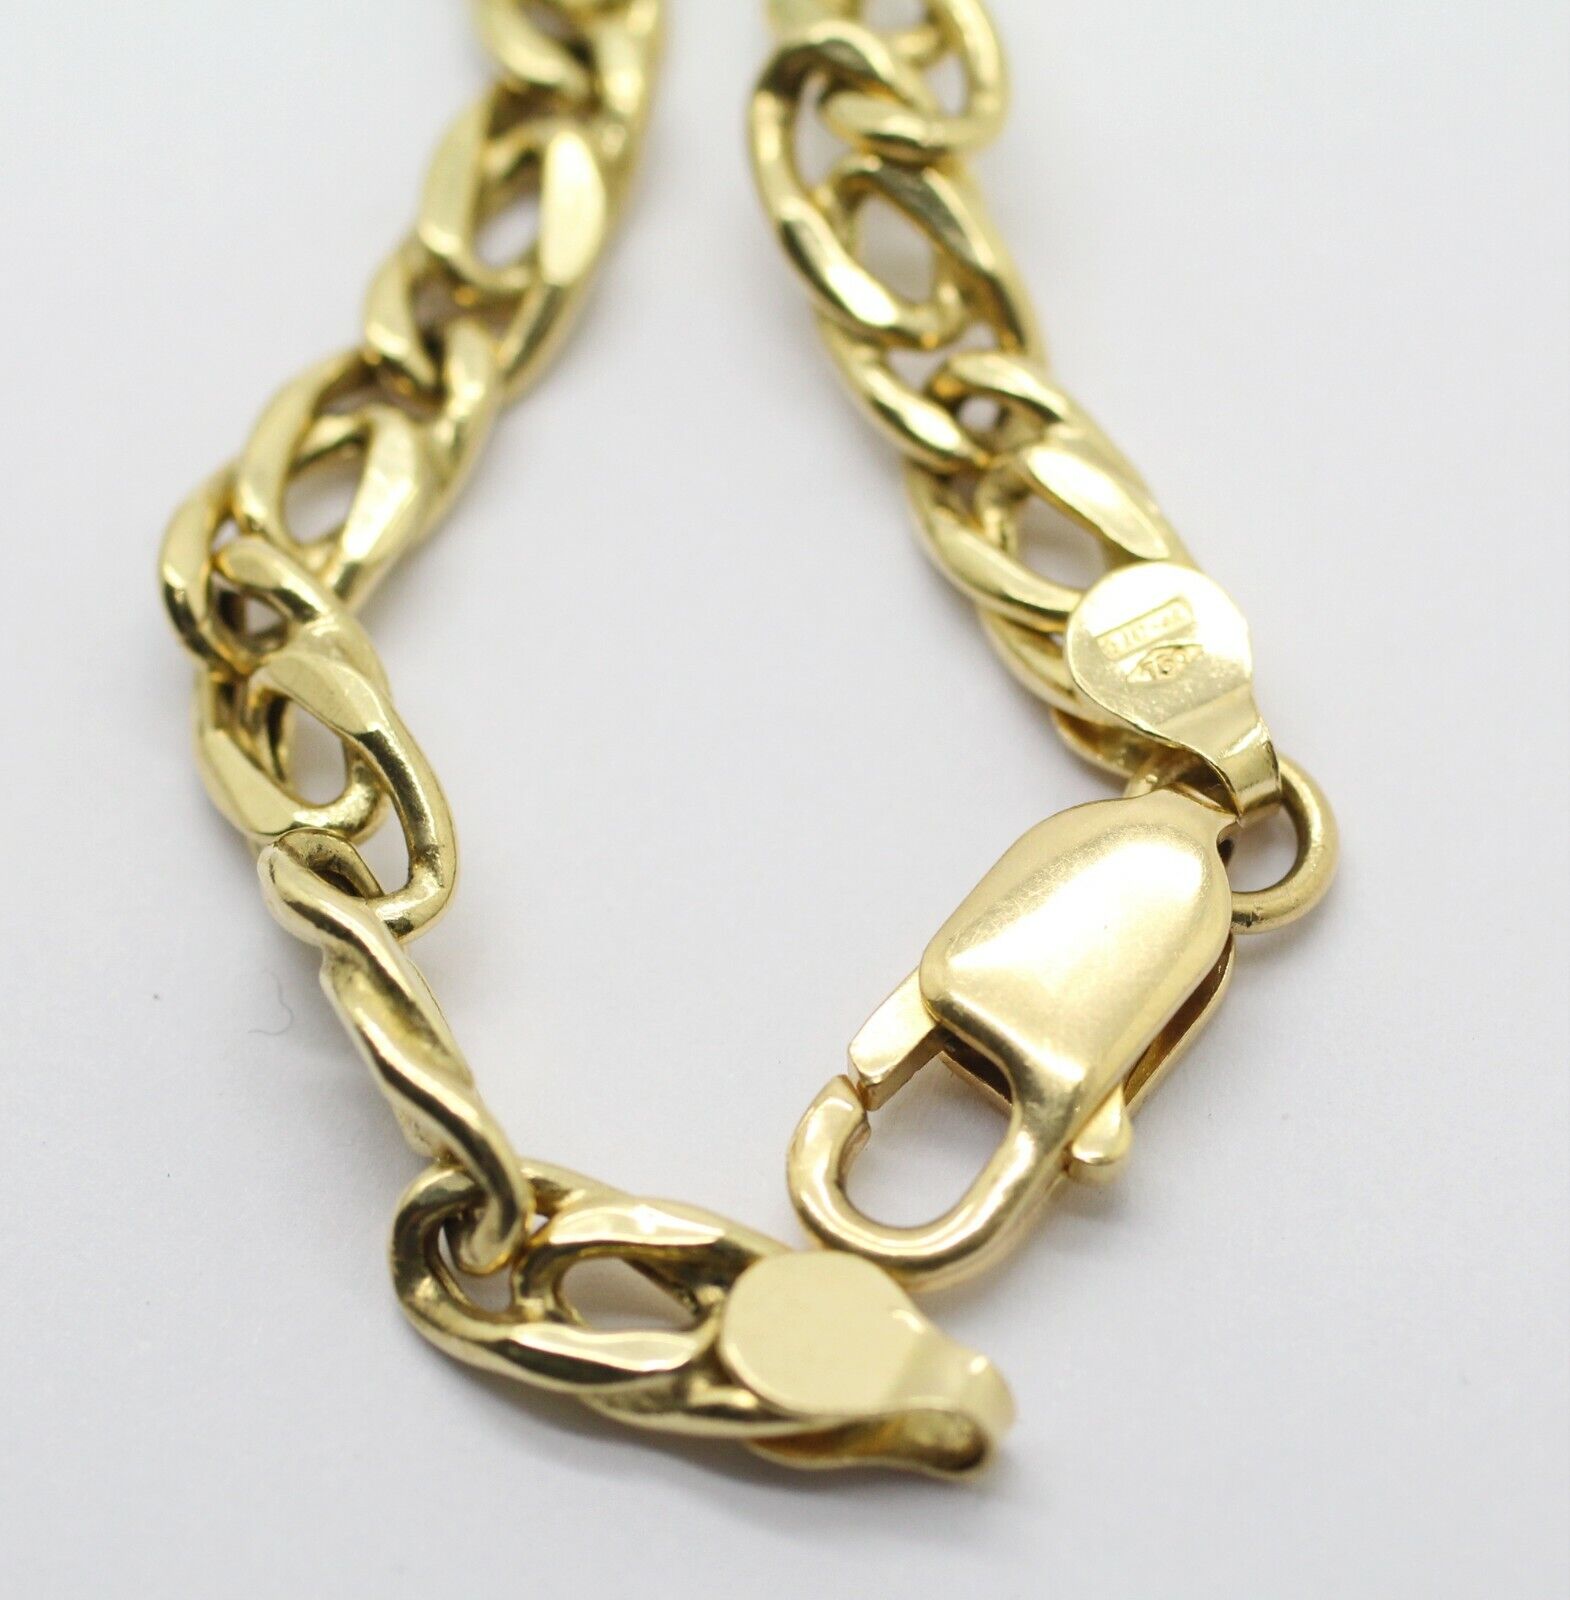 Hollow Cuban Chain Links Bracelet in 18kt Yellow Gold 9.2 GRS